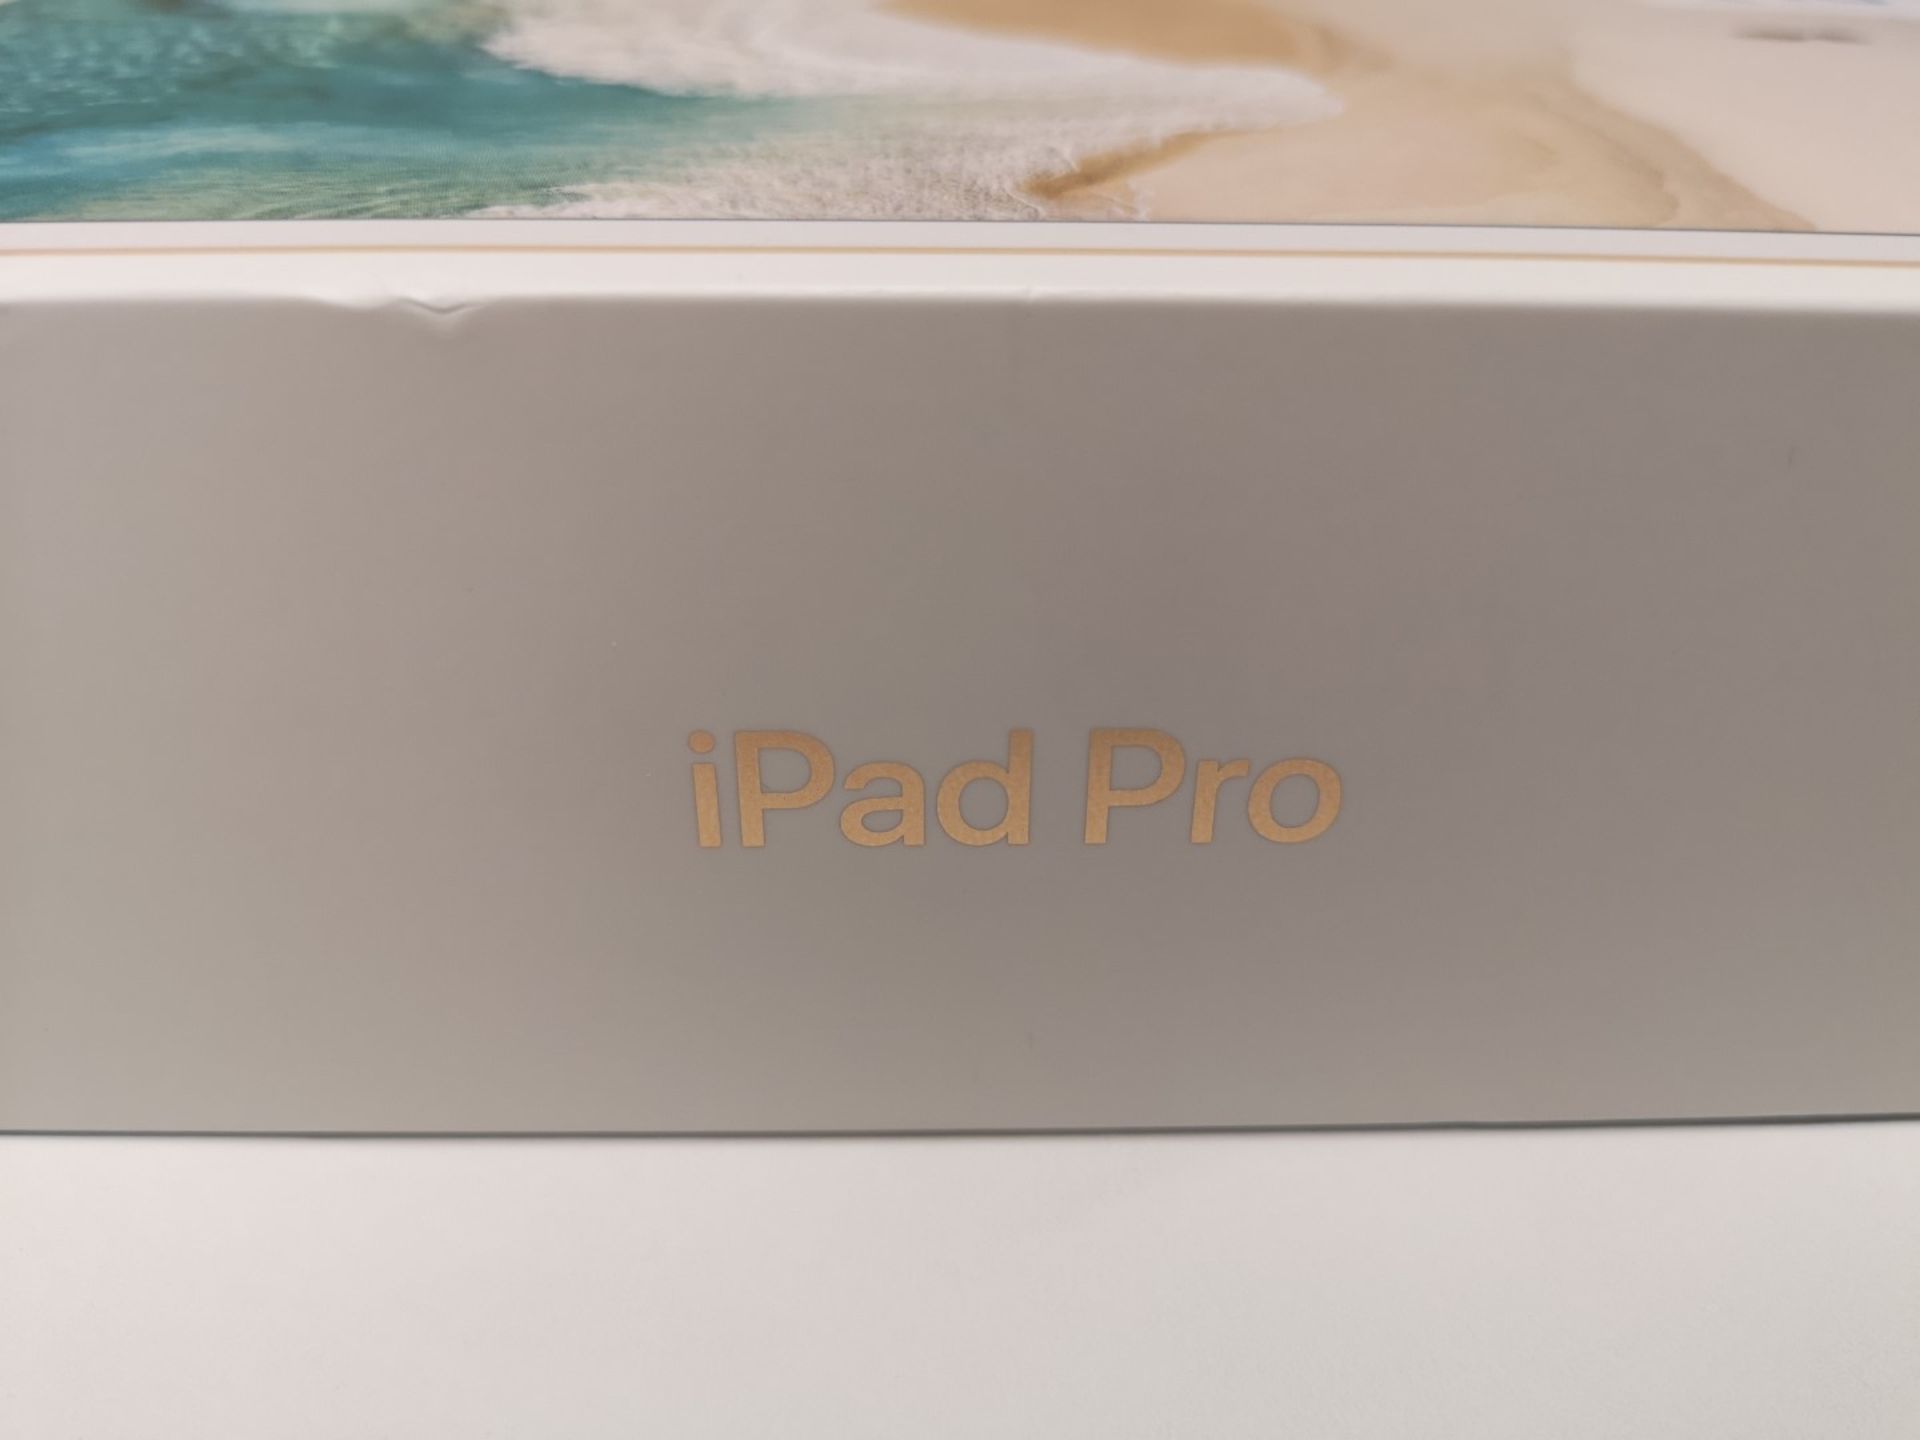 Apple iPad Pro 10.5", 512GB, Gold - Image 3 of 3